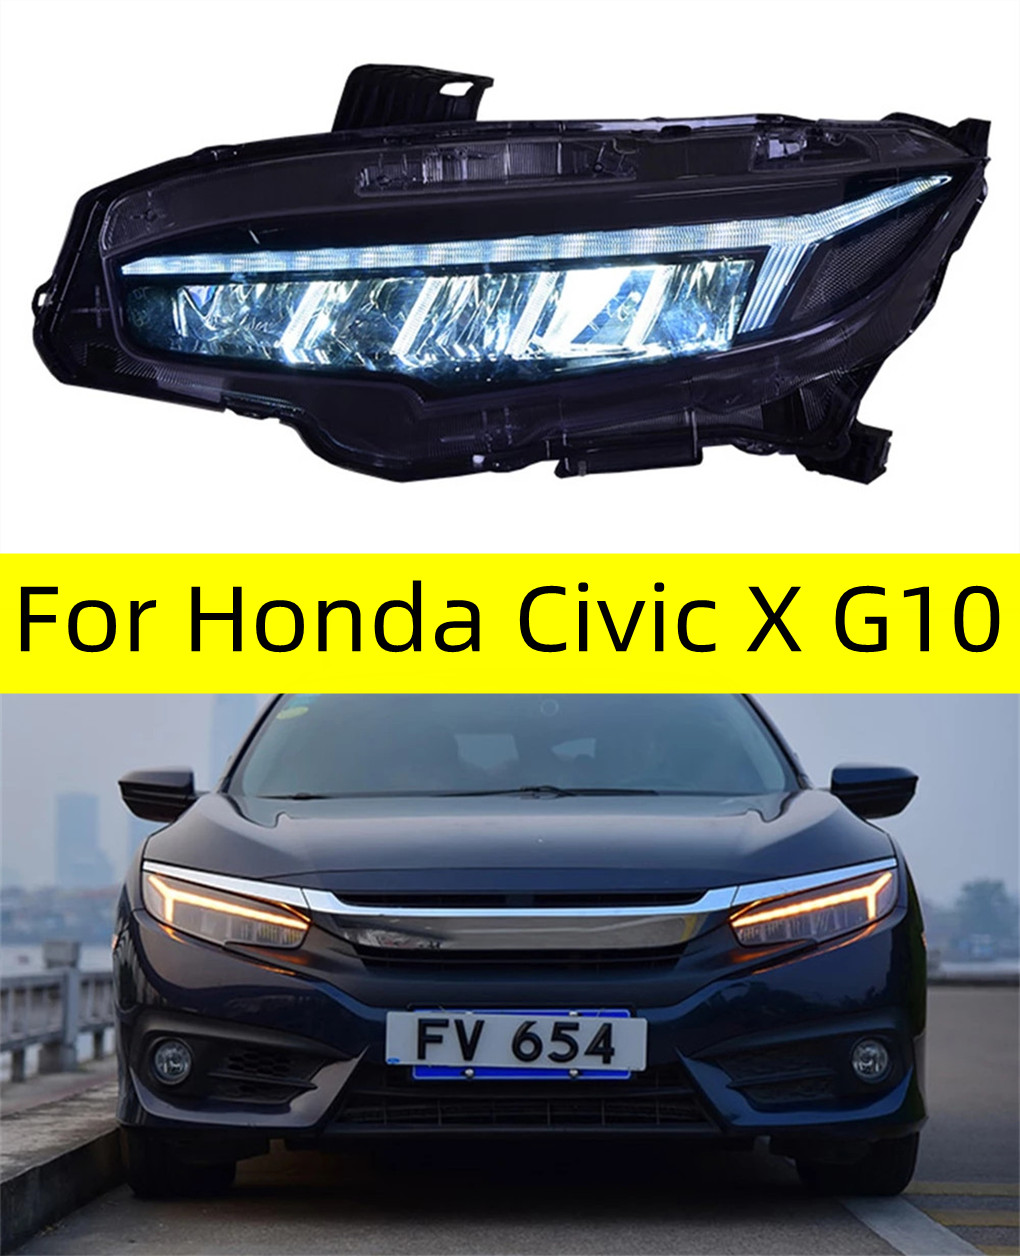 

2 PCS Auto Car Head Light Parts For Honda Civic X G10 Modified LED Lamps Headlights DRL Dual Projector Facelift